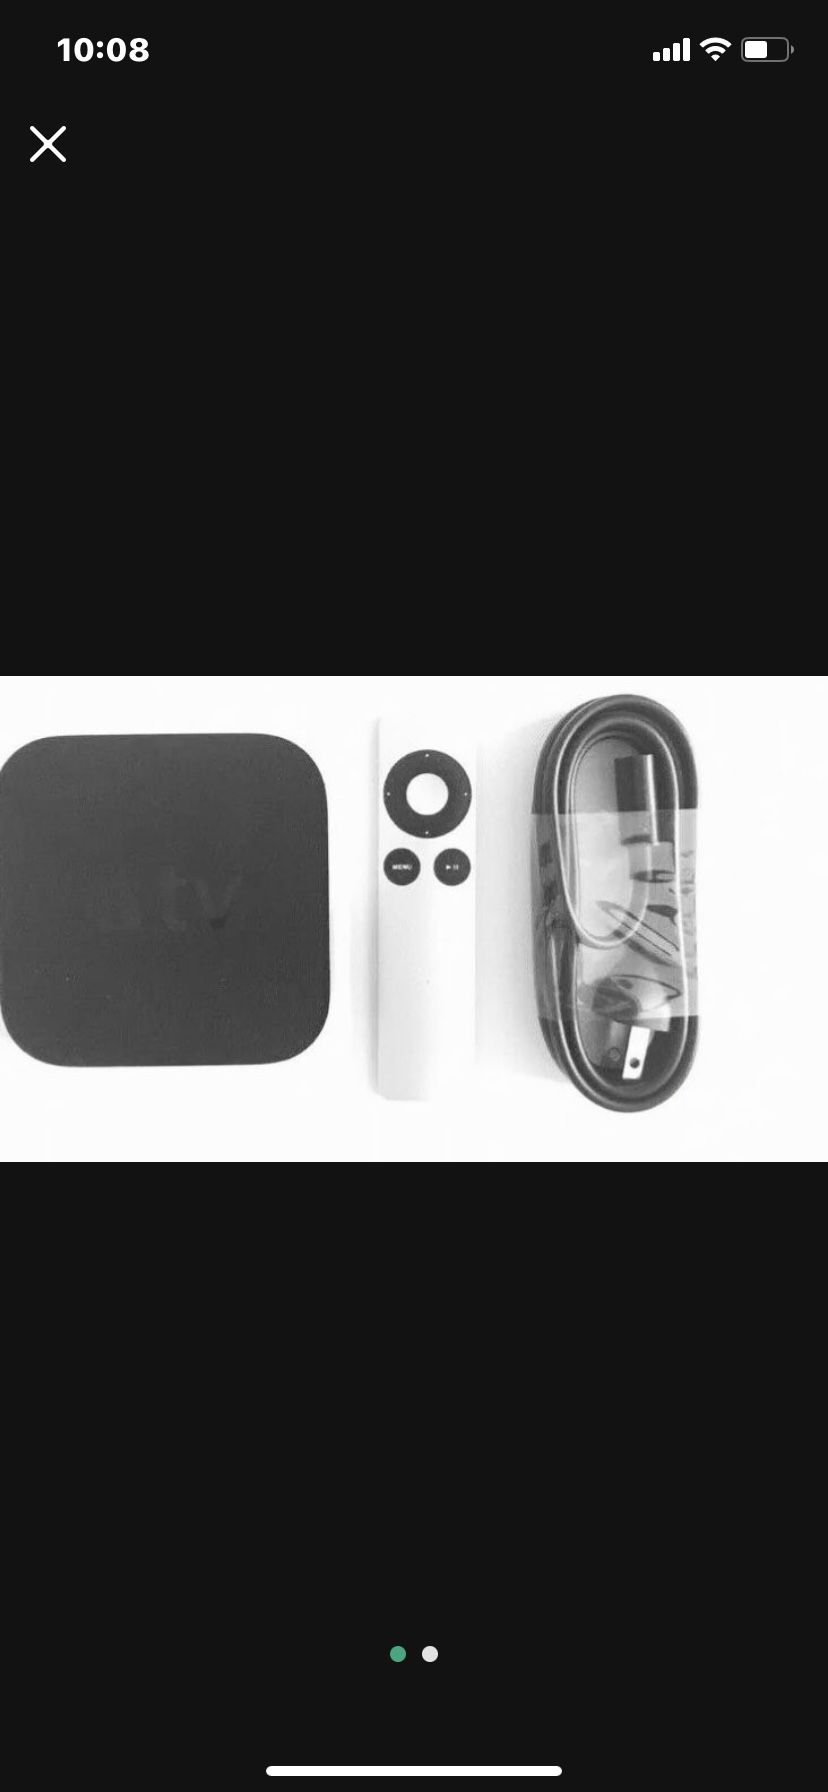 Apple TV HD Media Streamer with Genuine Apple Remote